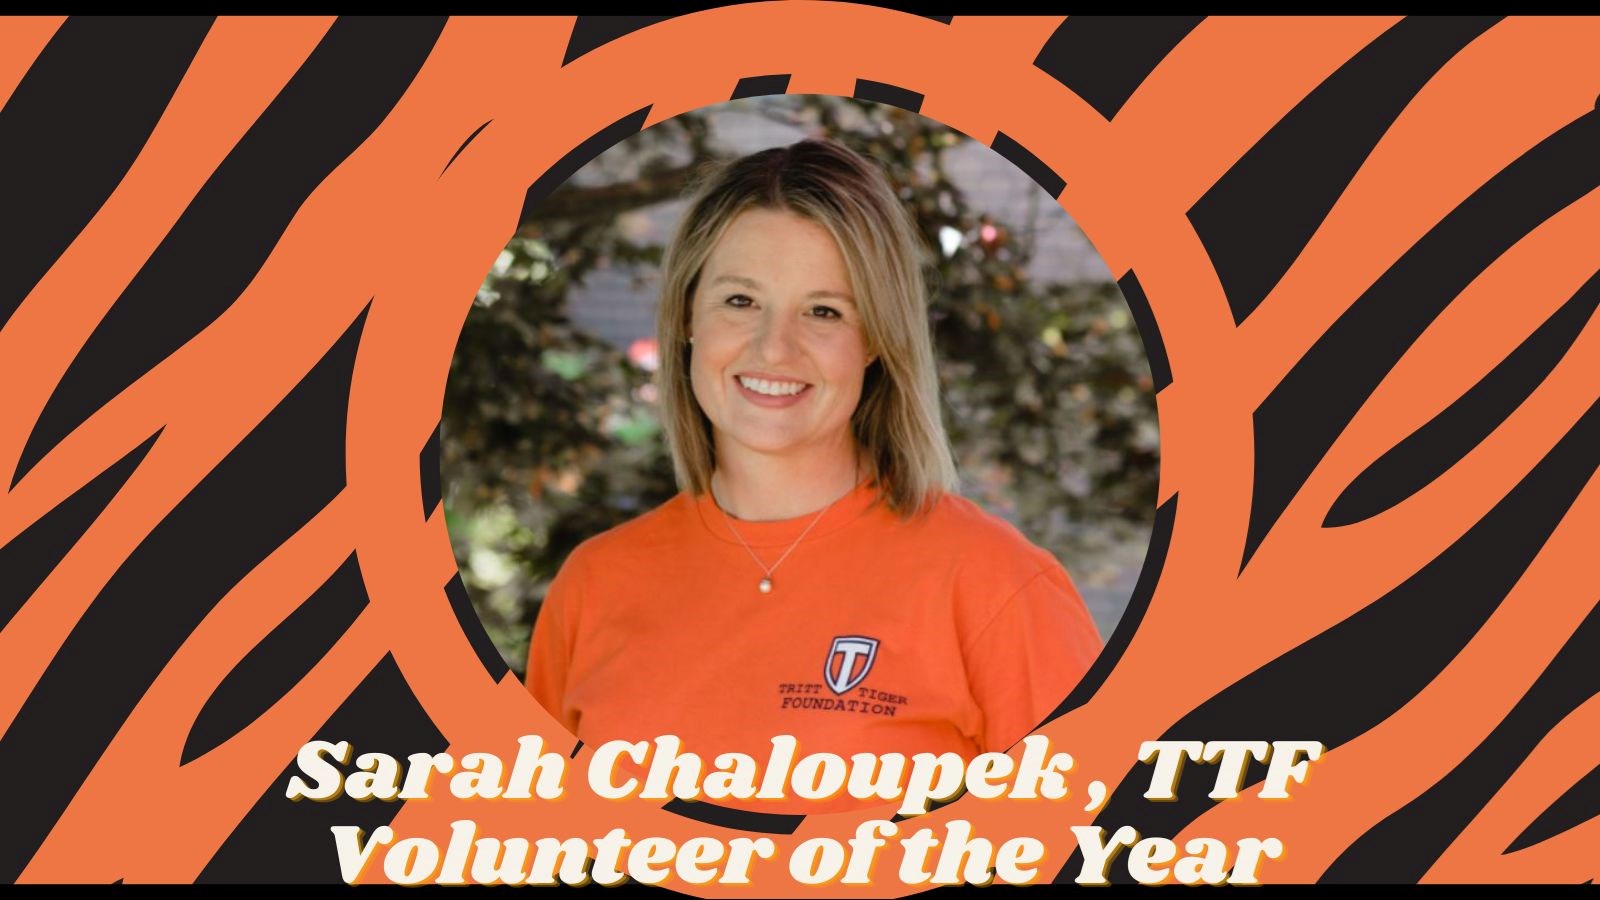 Sarah Chaloupek, President TTF and Volunteer of the Year